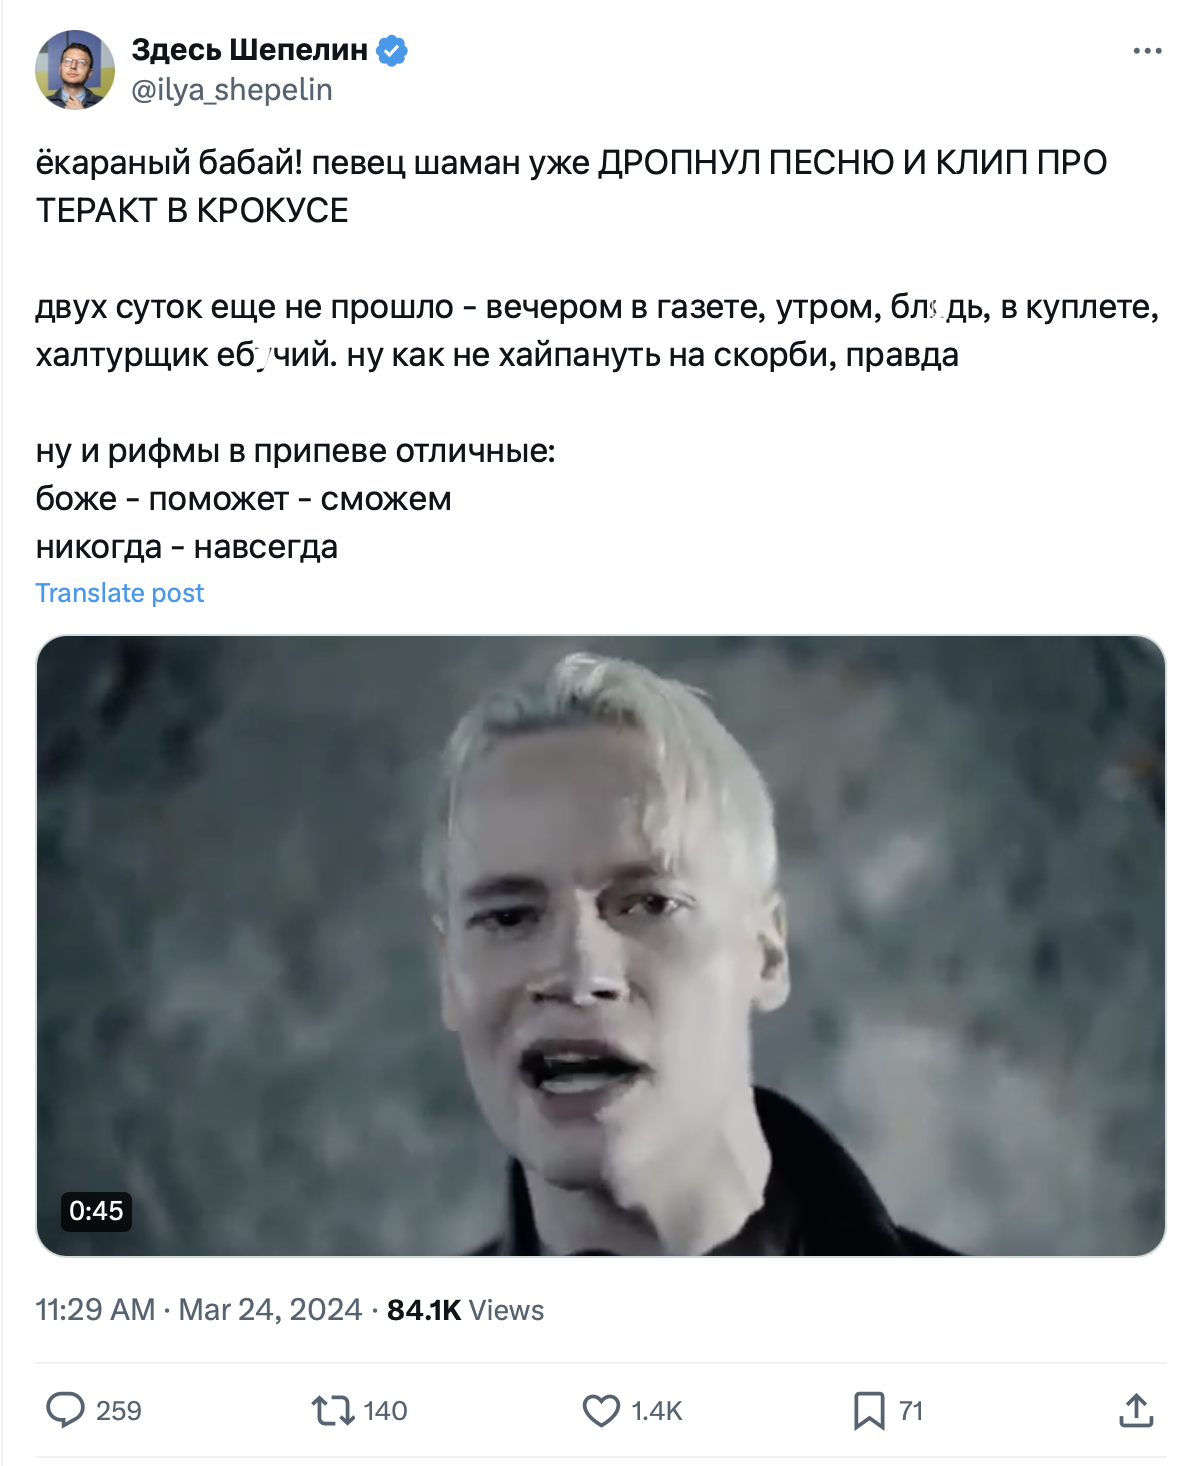 "И, конечно, ни разу не хайп": путинист Шаман уже записал песню о теракте в "Крокусе" и даже снял клип